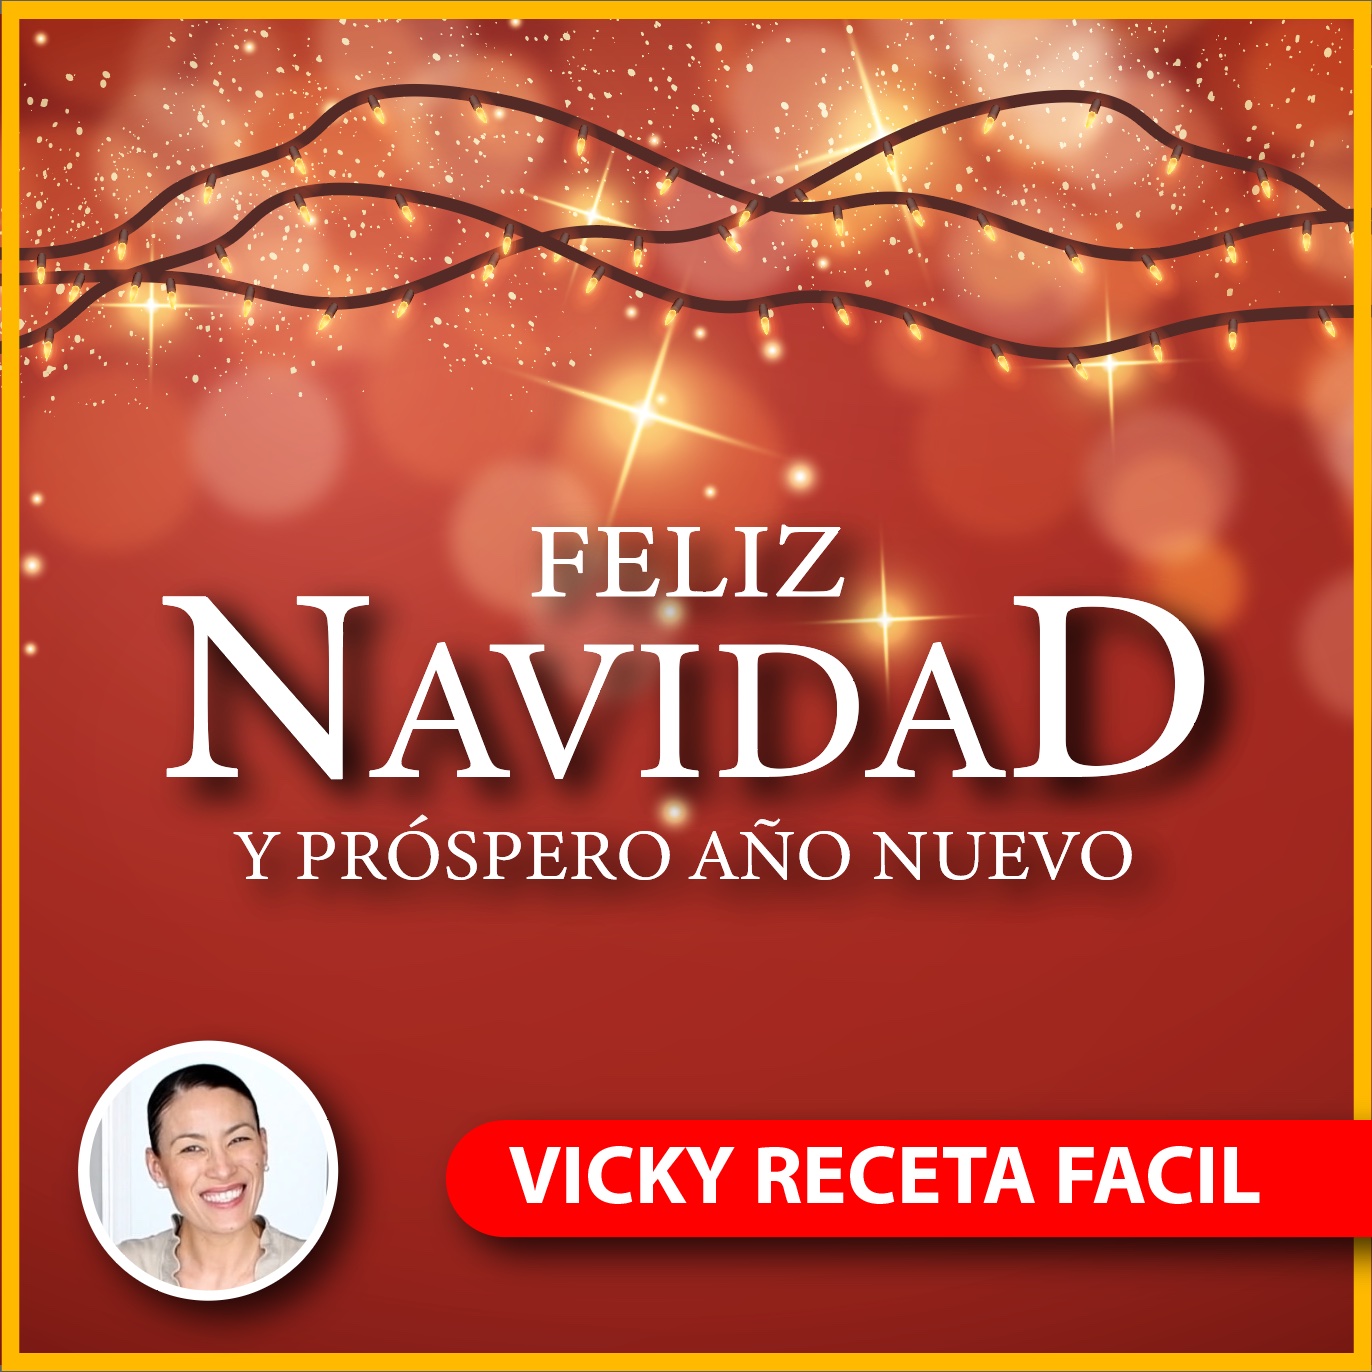 Vicky Receta Facil (@VickRecetaFacil) / Twitter